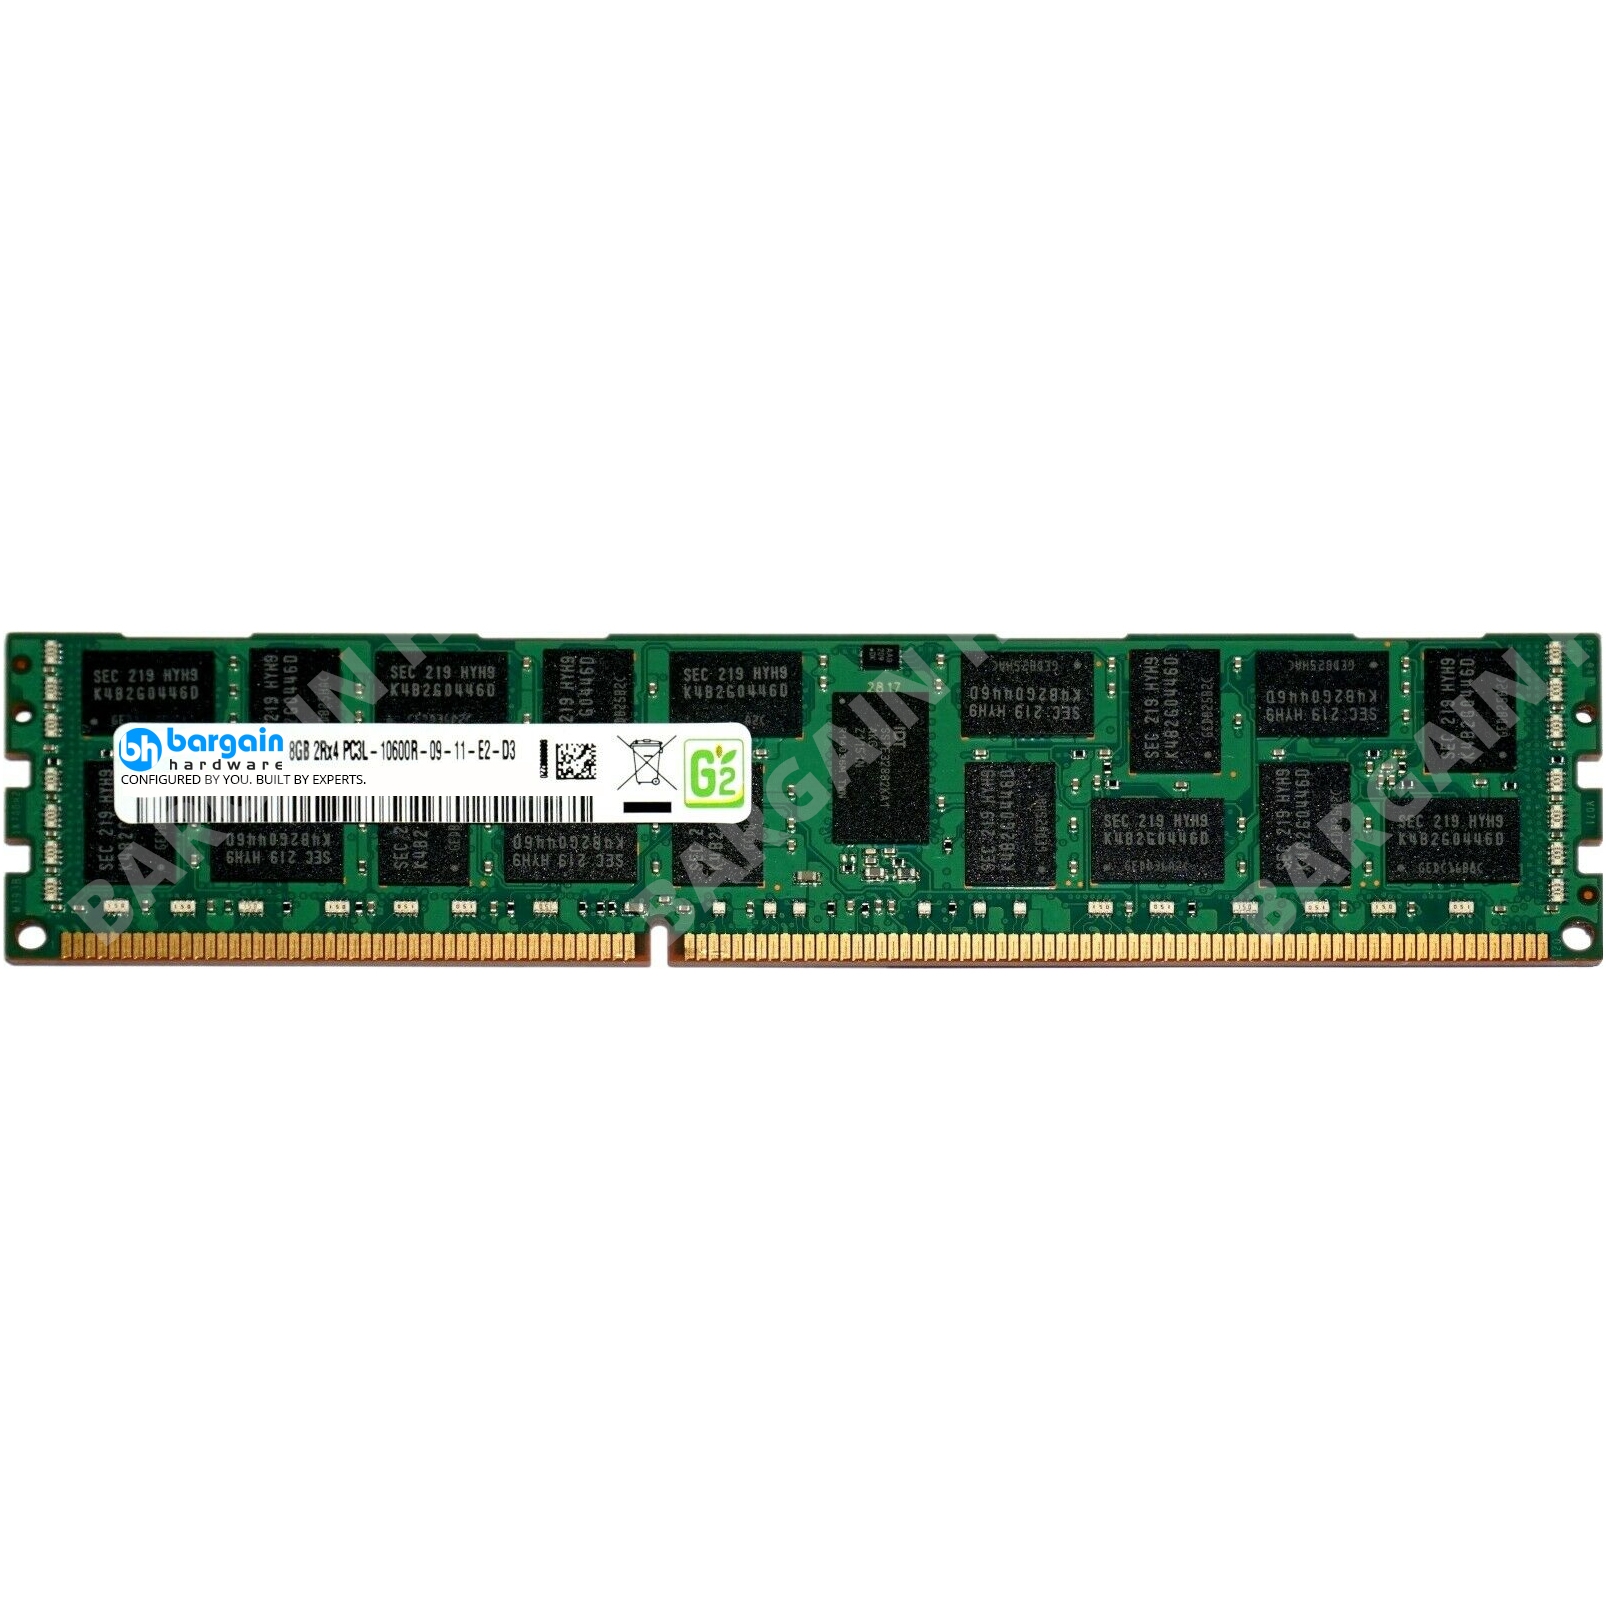 6x 8GB PC3L-10600R DDR3 ECC Registered (2Rx4) Server RAM memory - 48GB total